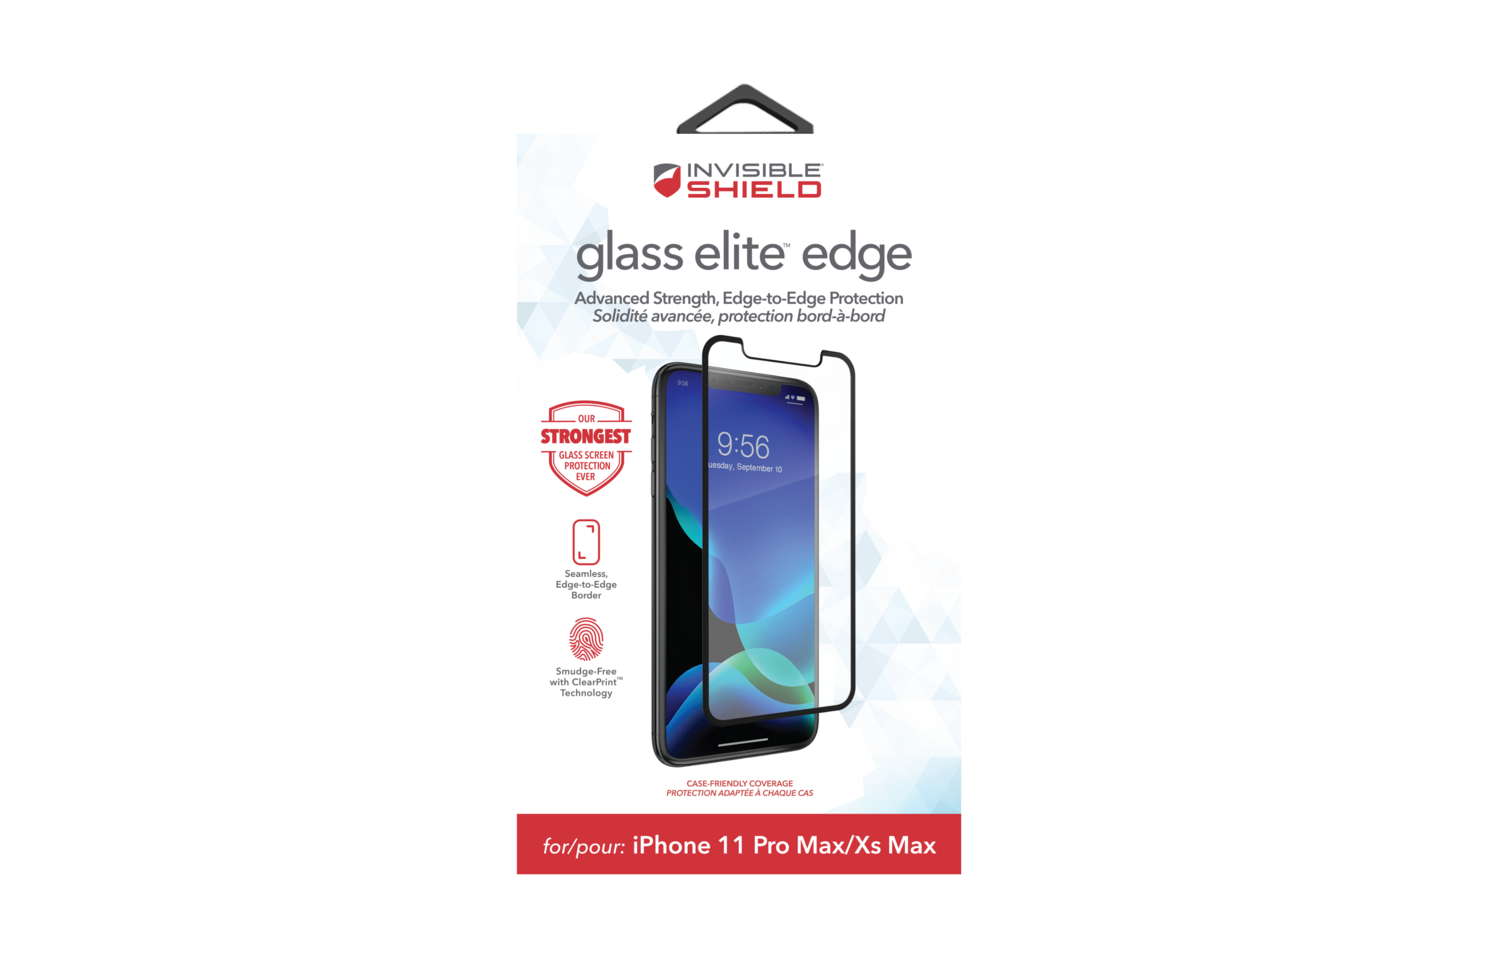 ZAGG InvisibleShield iPhone 11 Pro Max 6.5" Glass Elite Edge, Screen Black